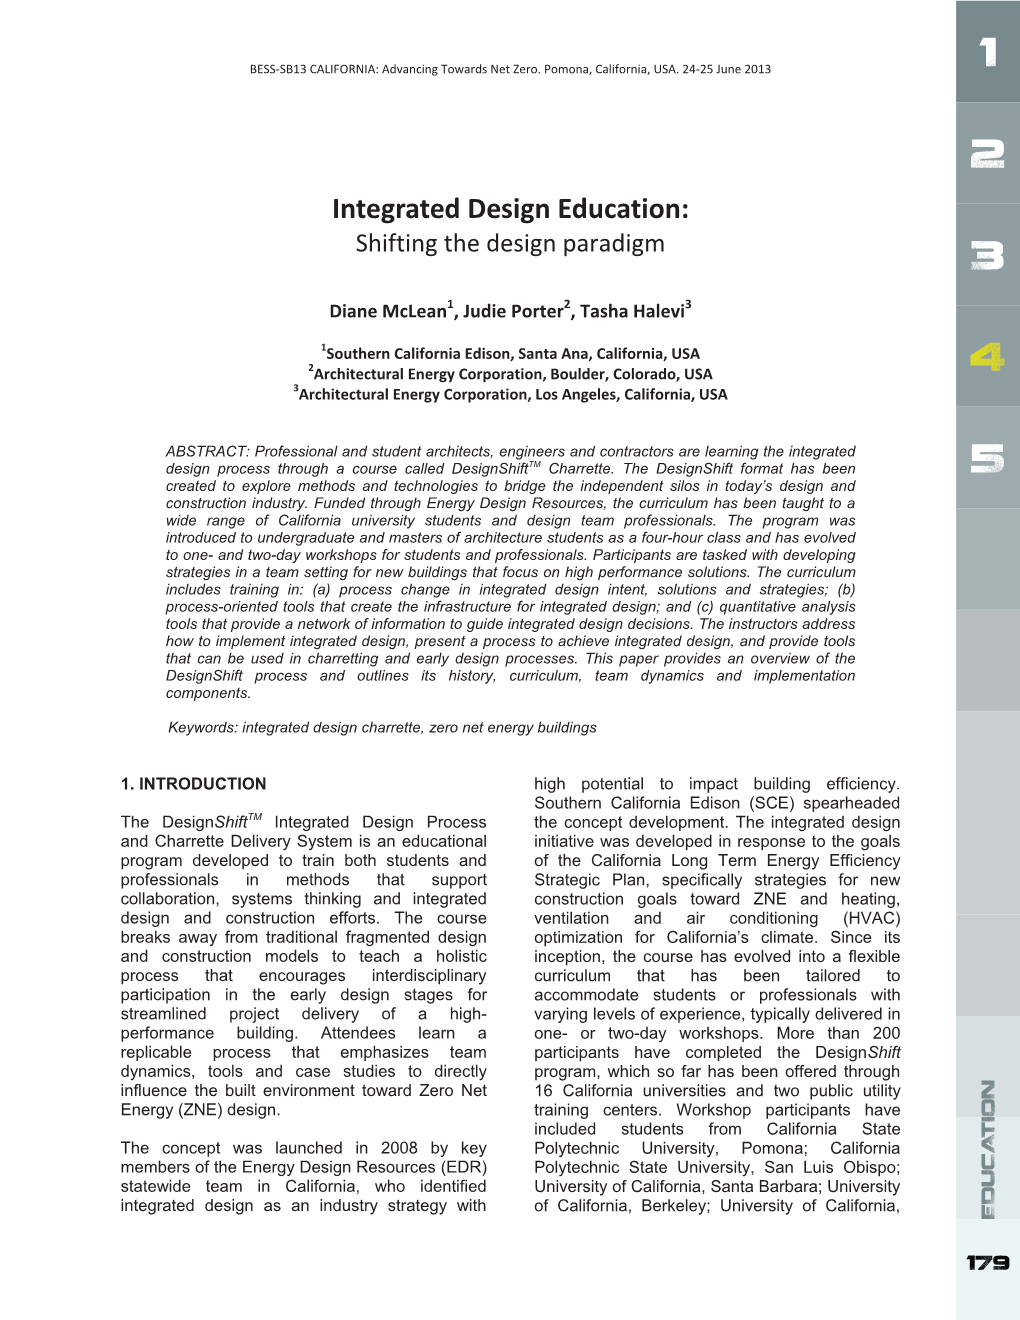 Integrated Design Education: Shifting the Design Paradigm 3